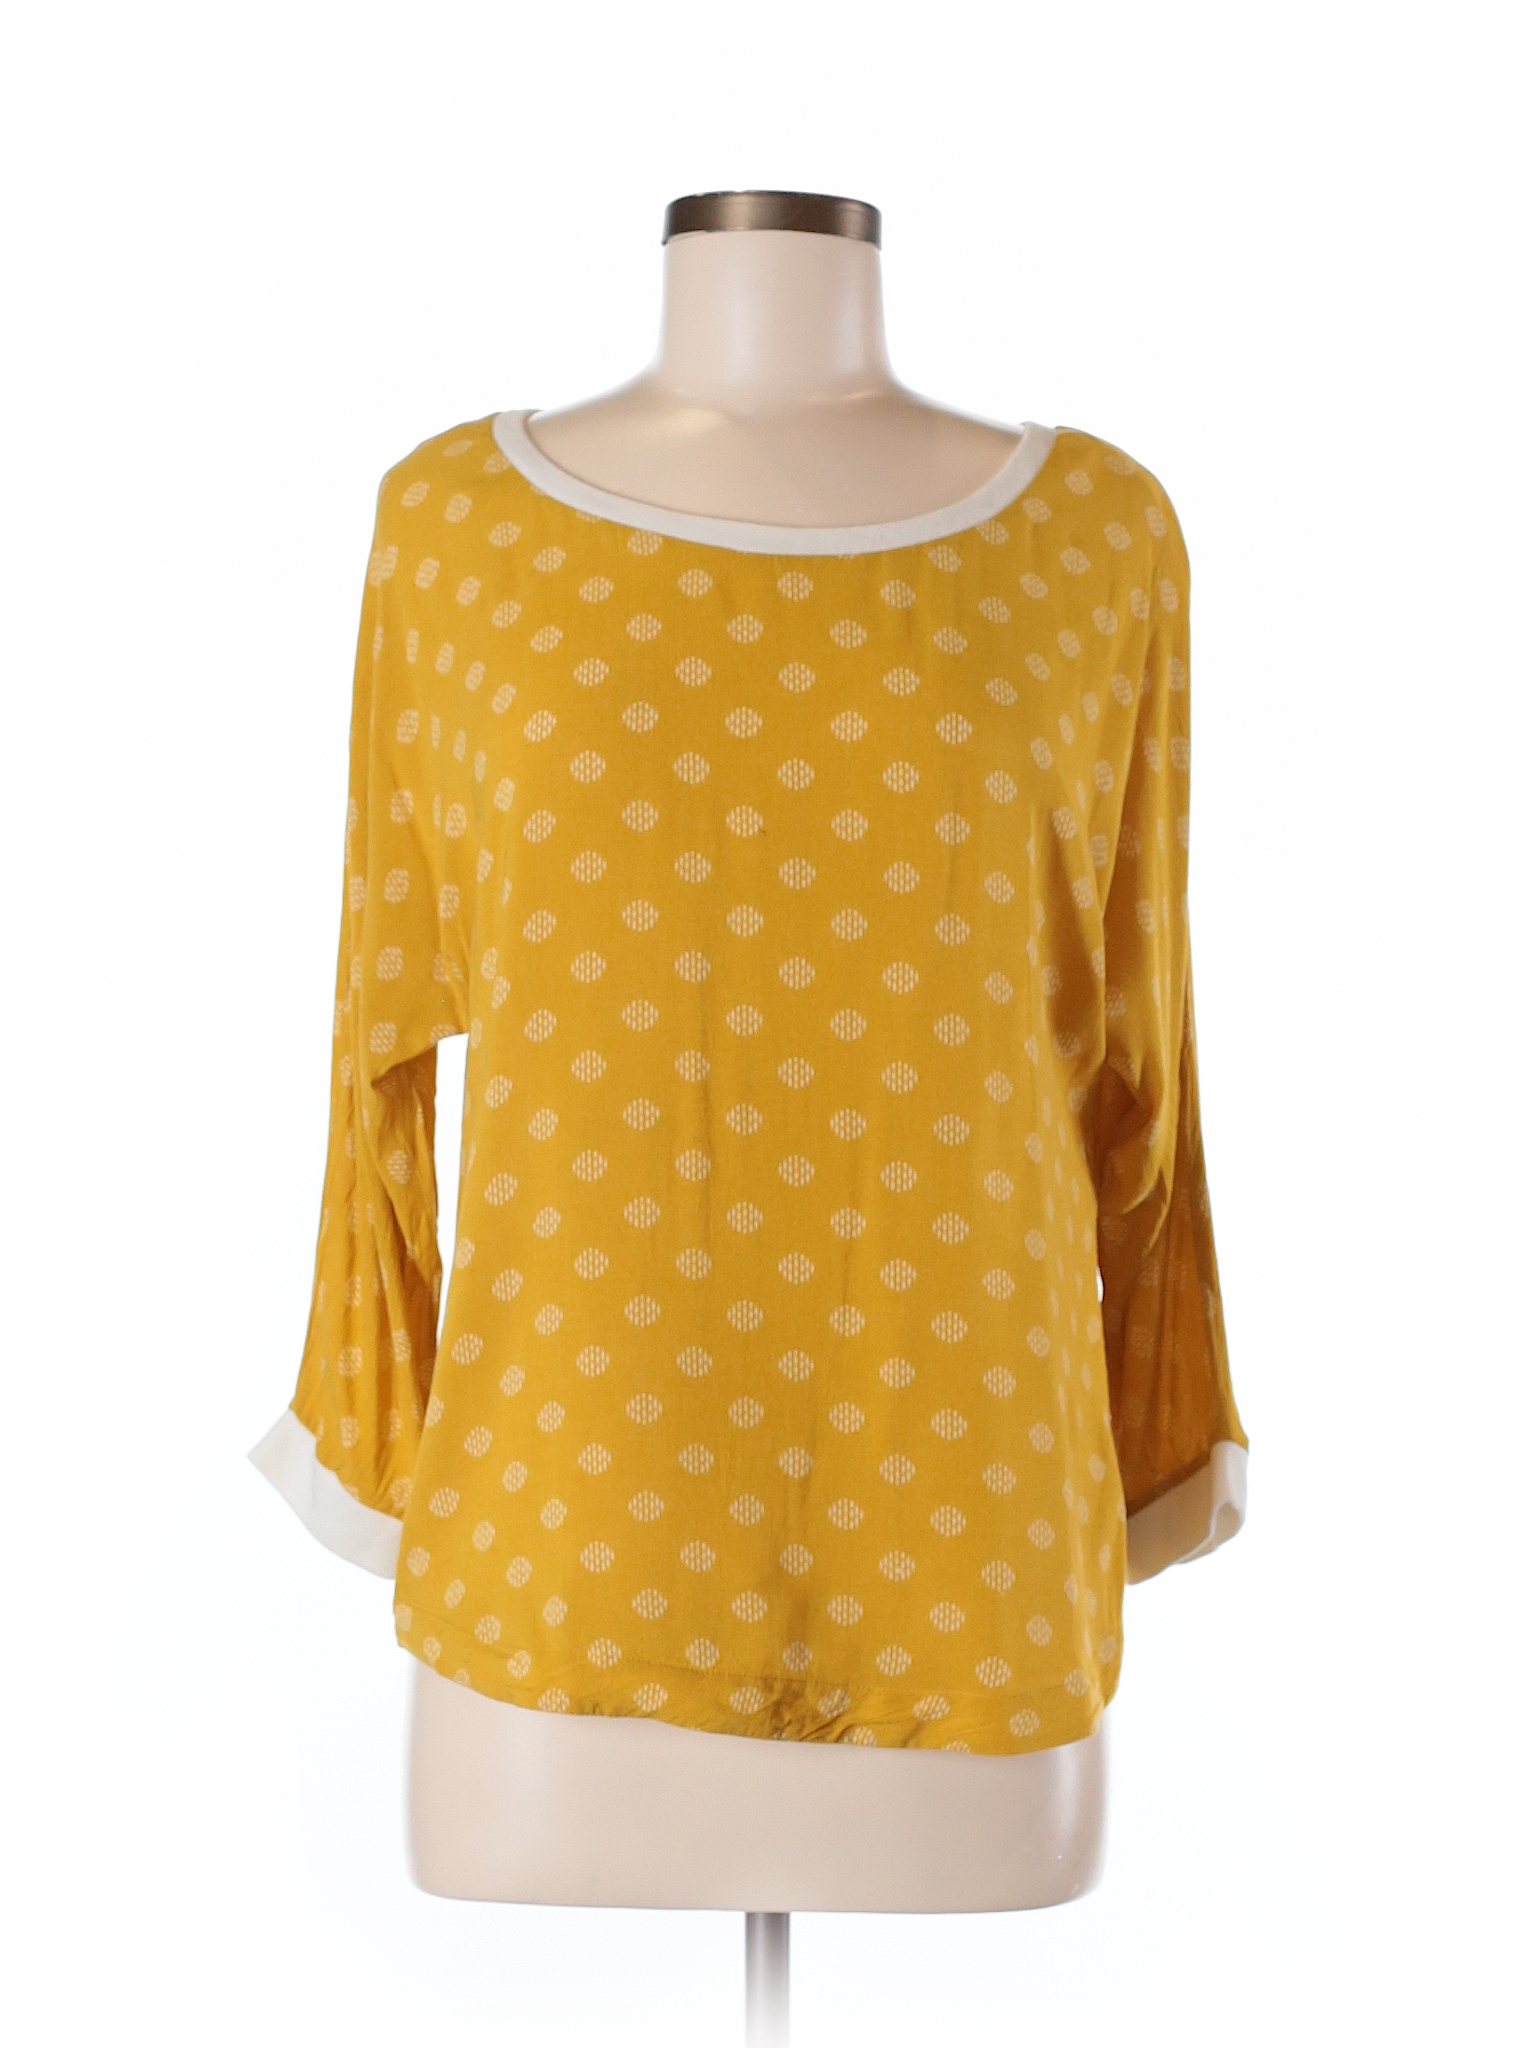 Maeve 100% Rayon Print Dark Yellow 3/4 Sleeve Blouse Size 8 - 70% off ...